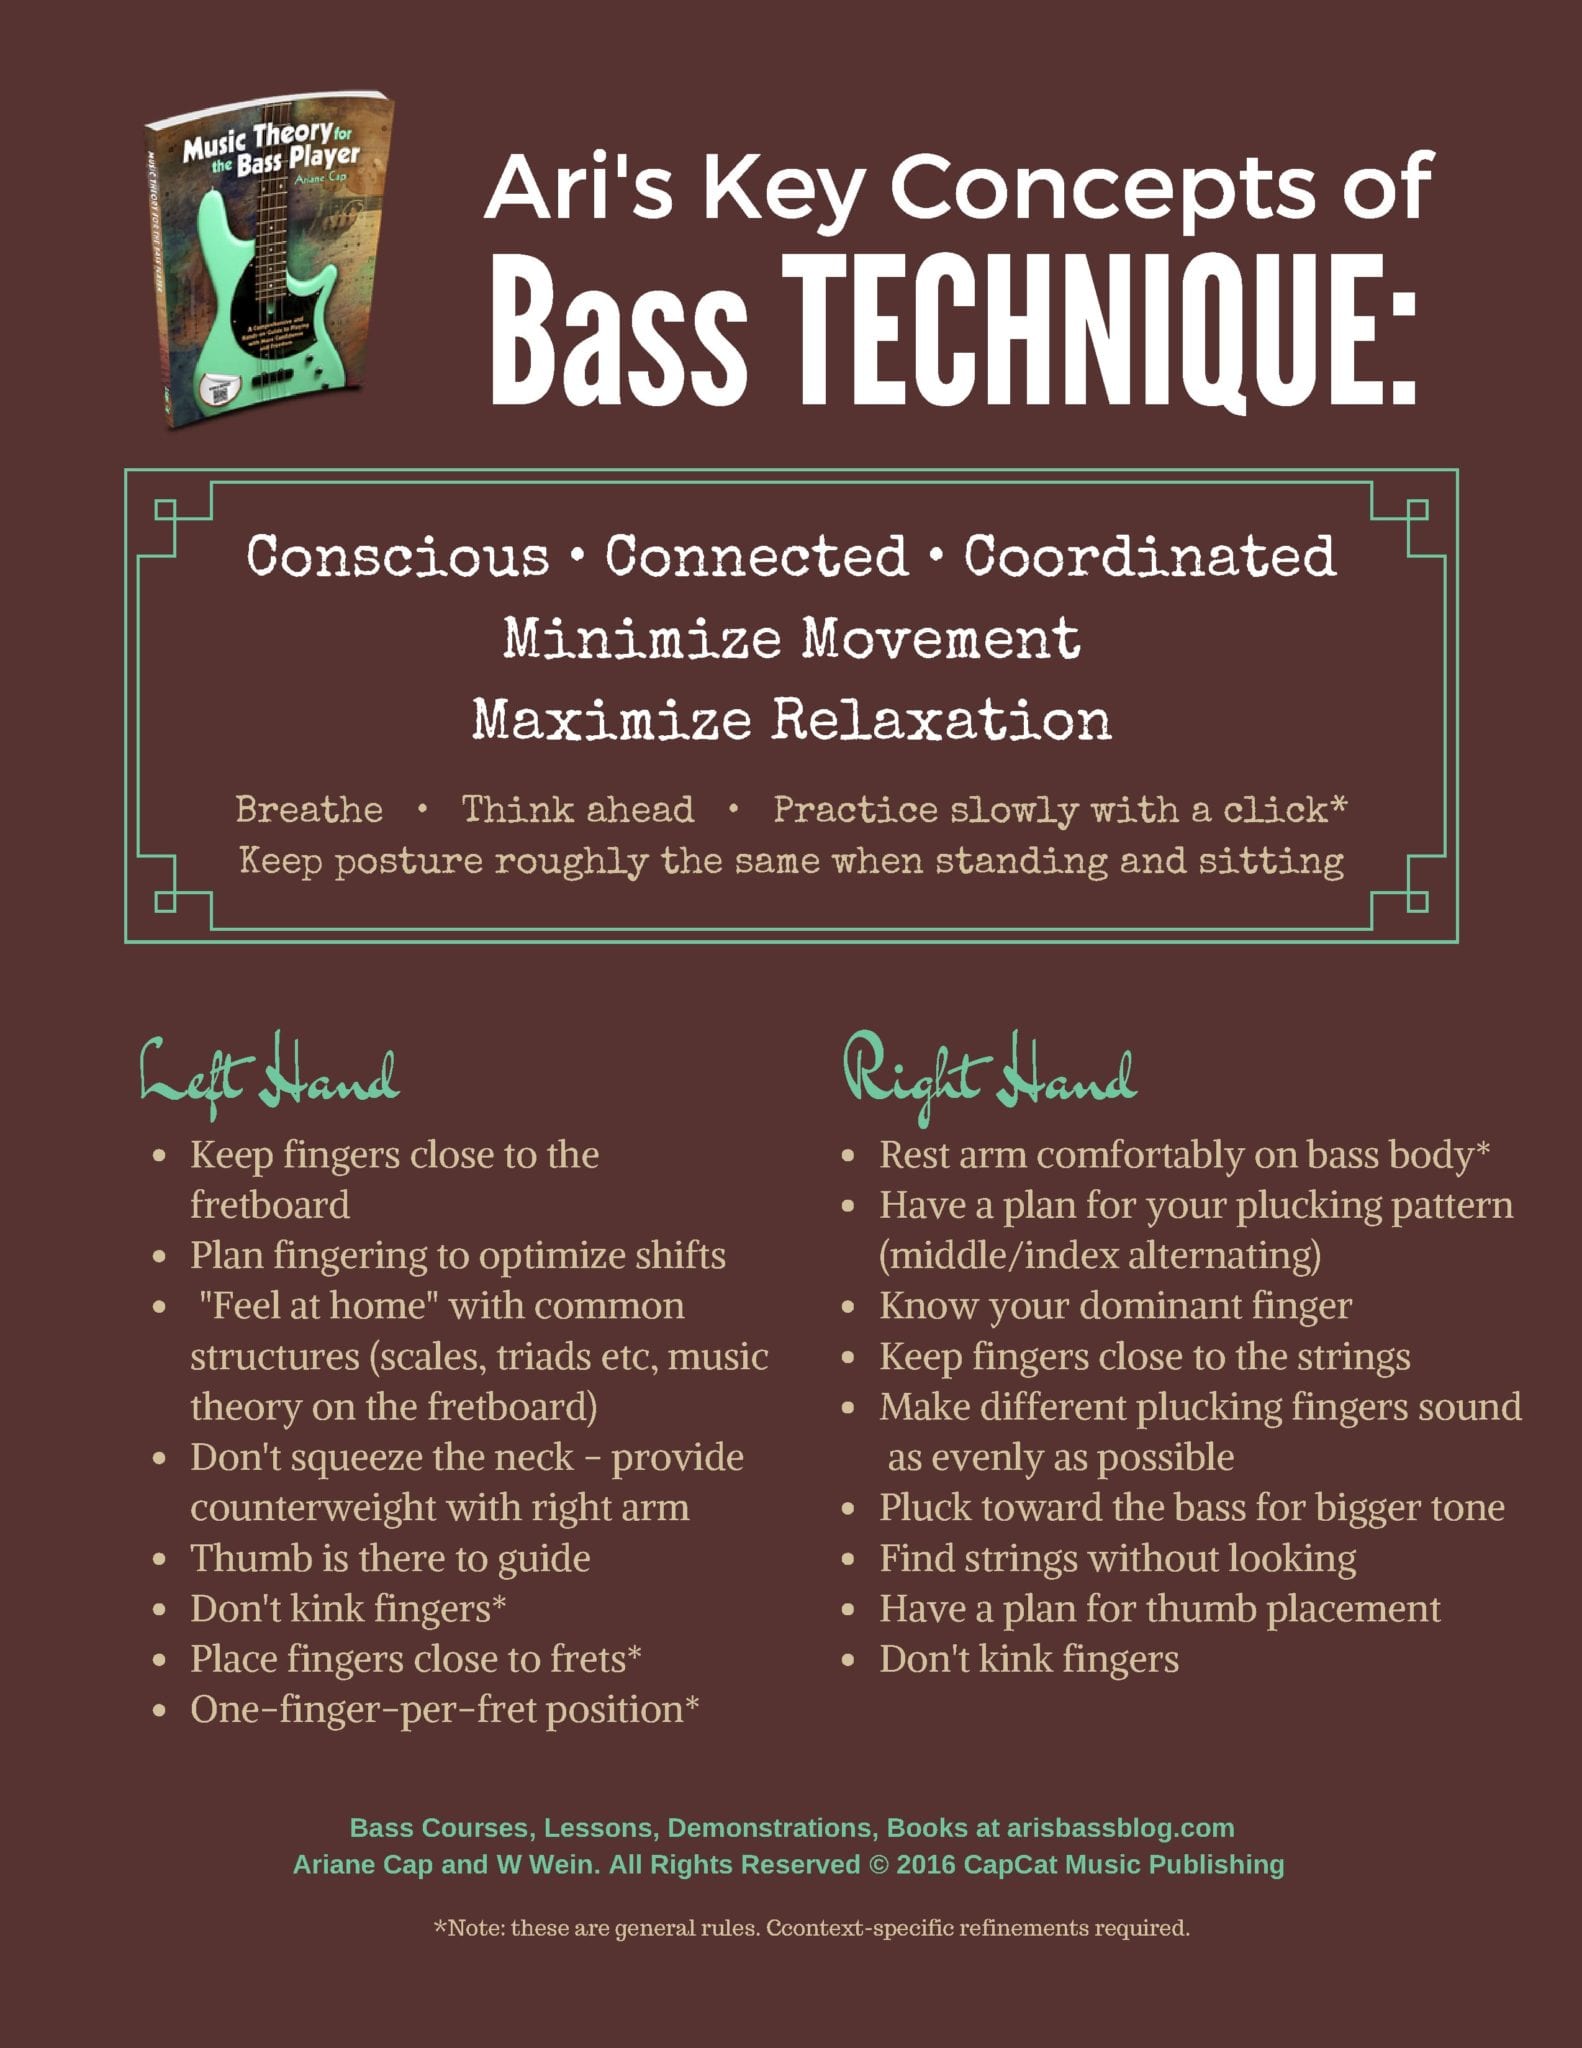 Ari's Key Concepts of Bass Technique